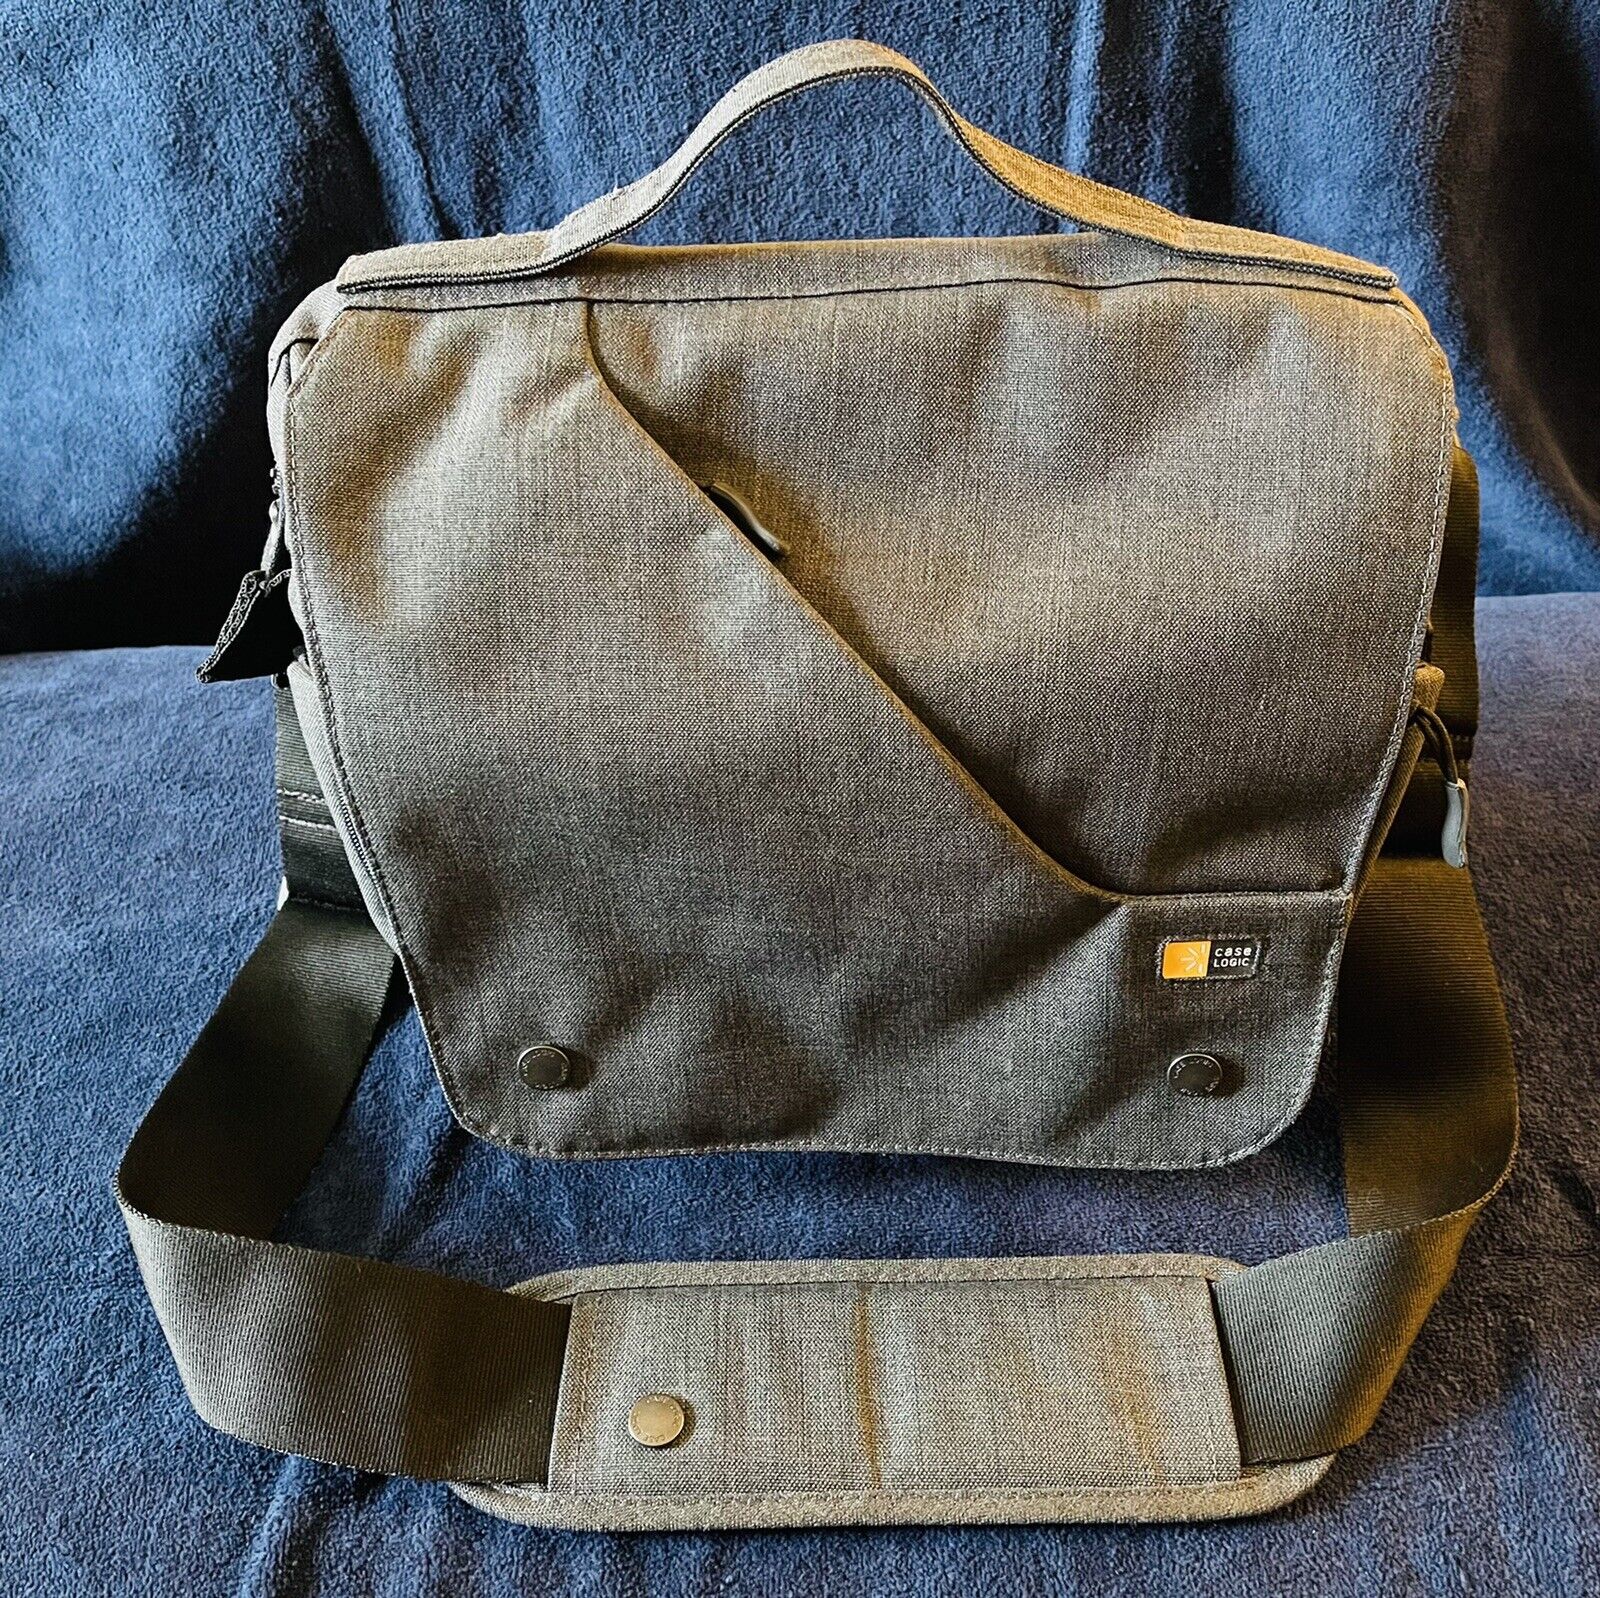 Case Logic Reflexion Camera/iPad Messenger Carrying Bag, Grey, NEW